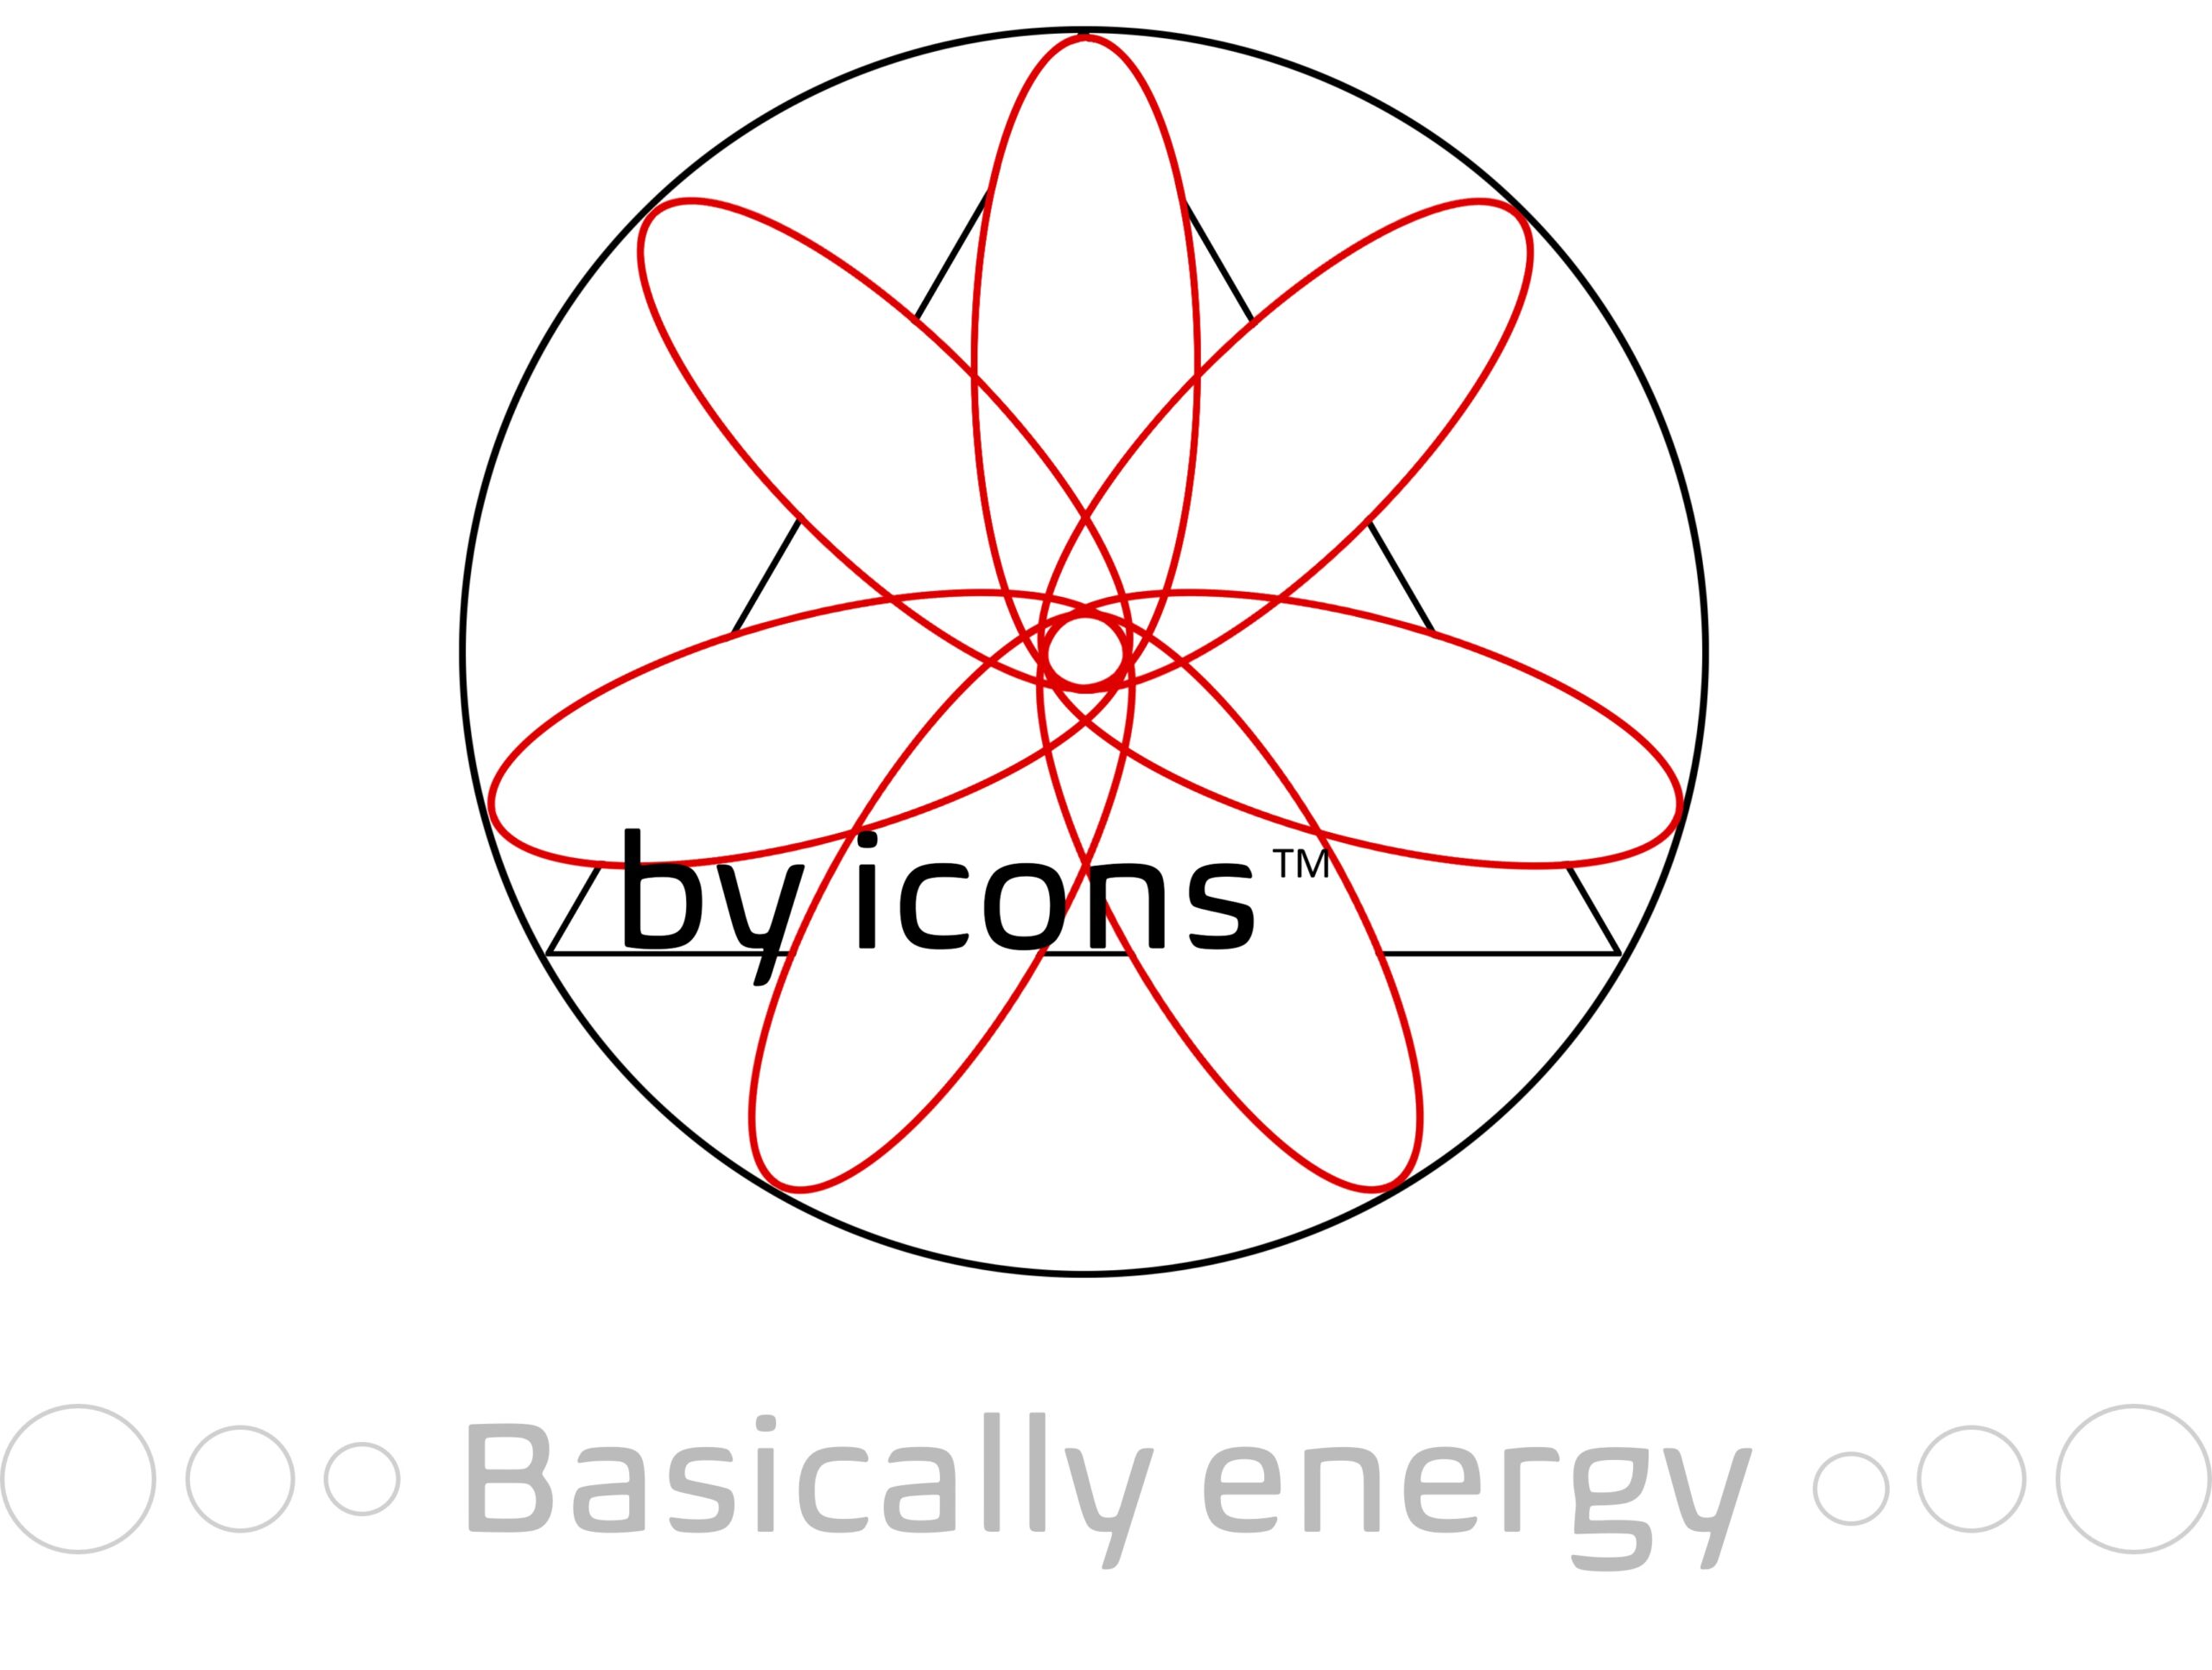 byicons_basically_energy_logo_PP